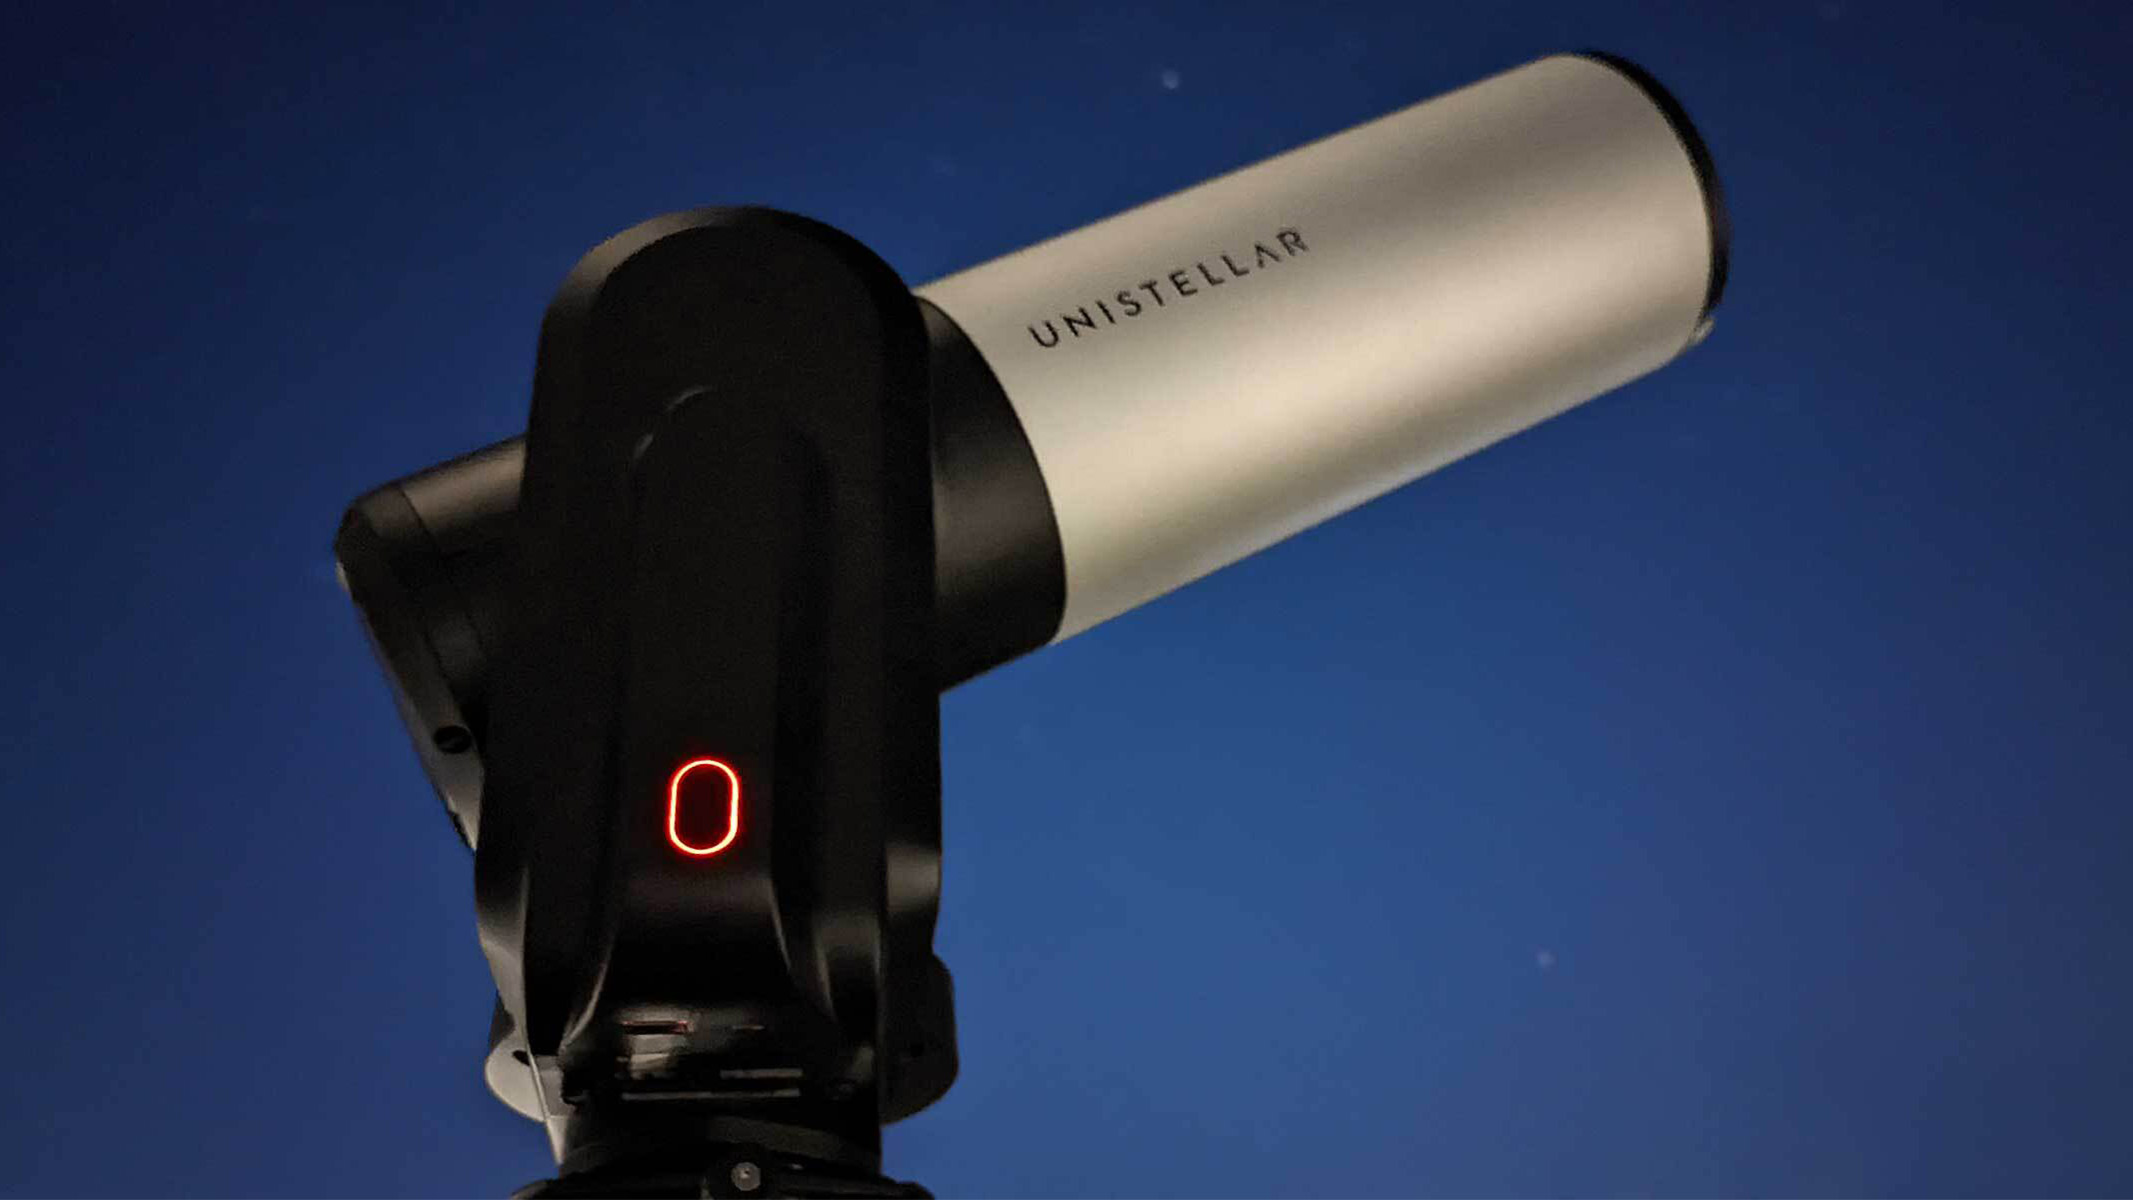 Unistellar evscope 2图像审查